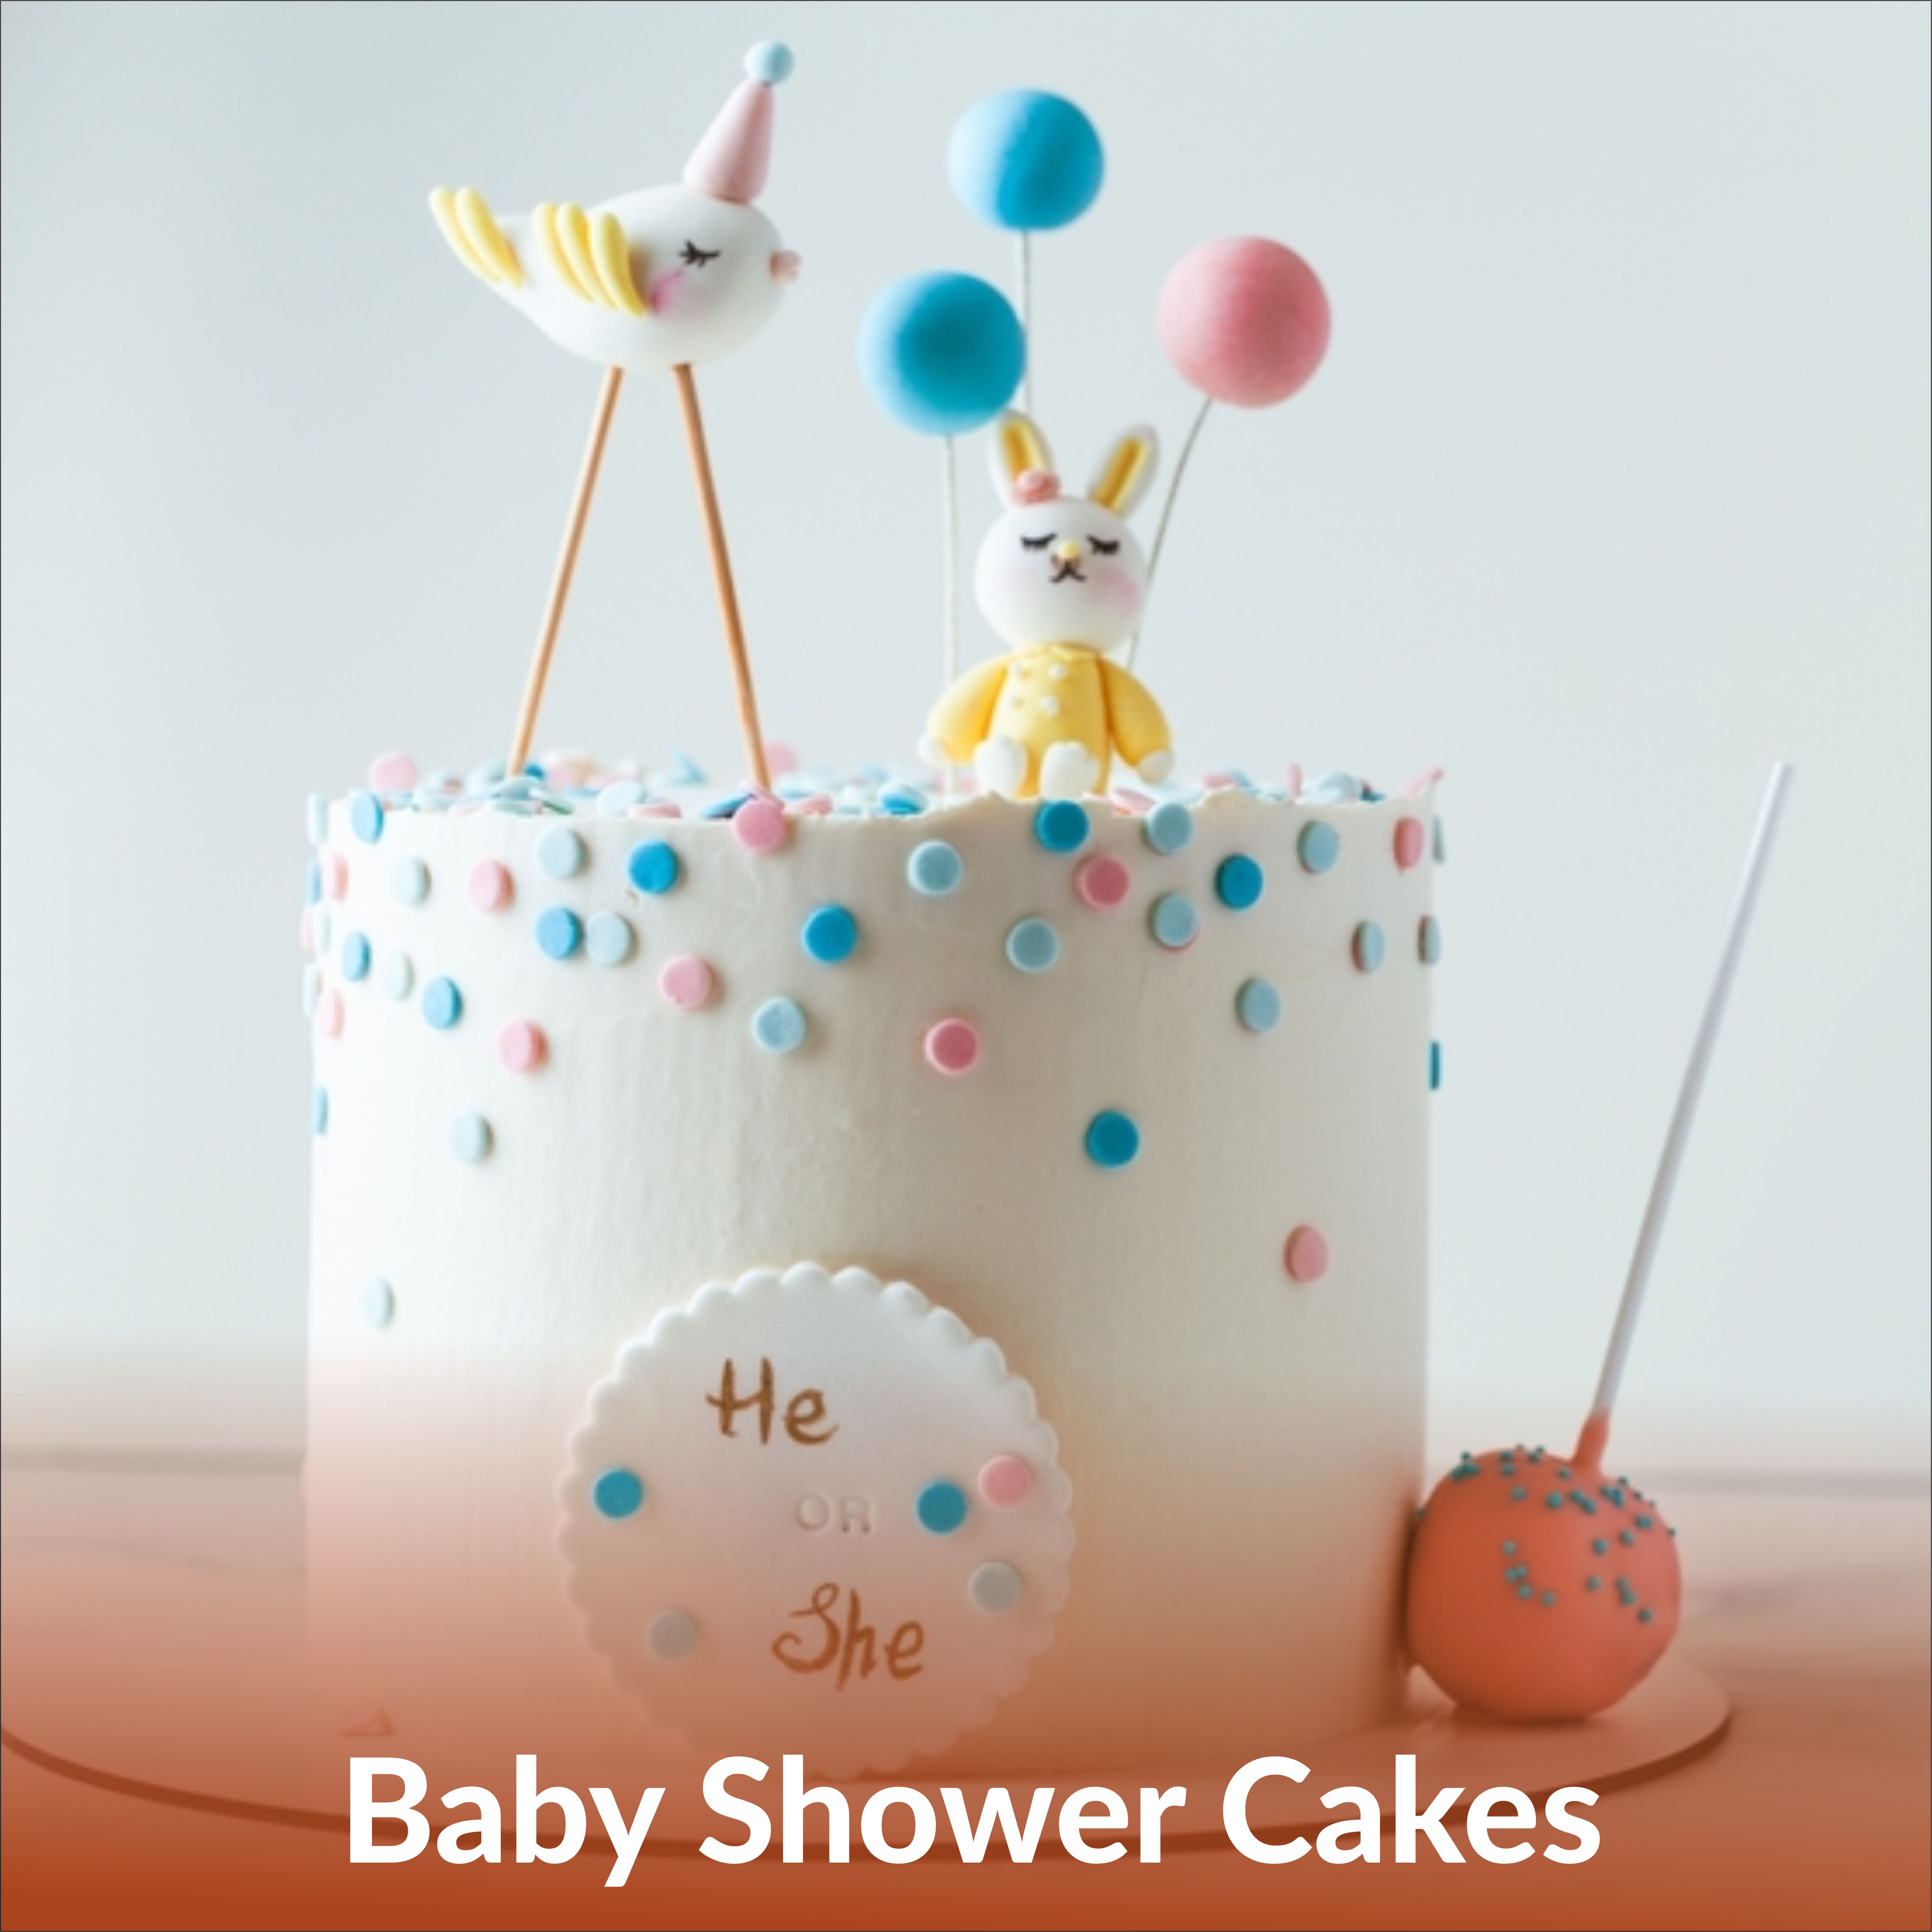 Baby Shower cake designs